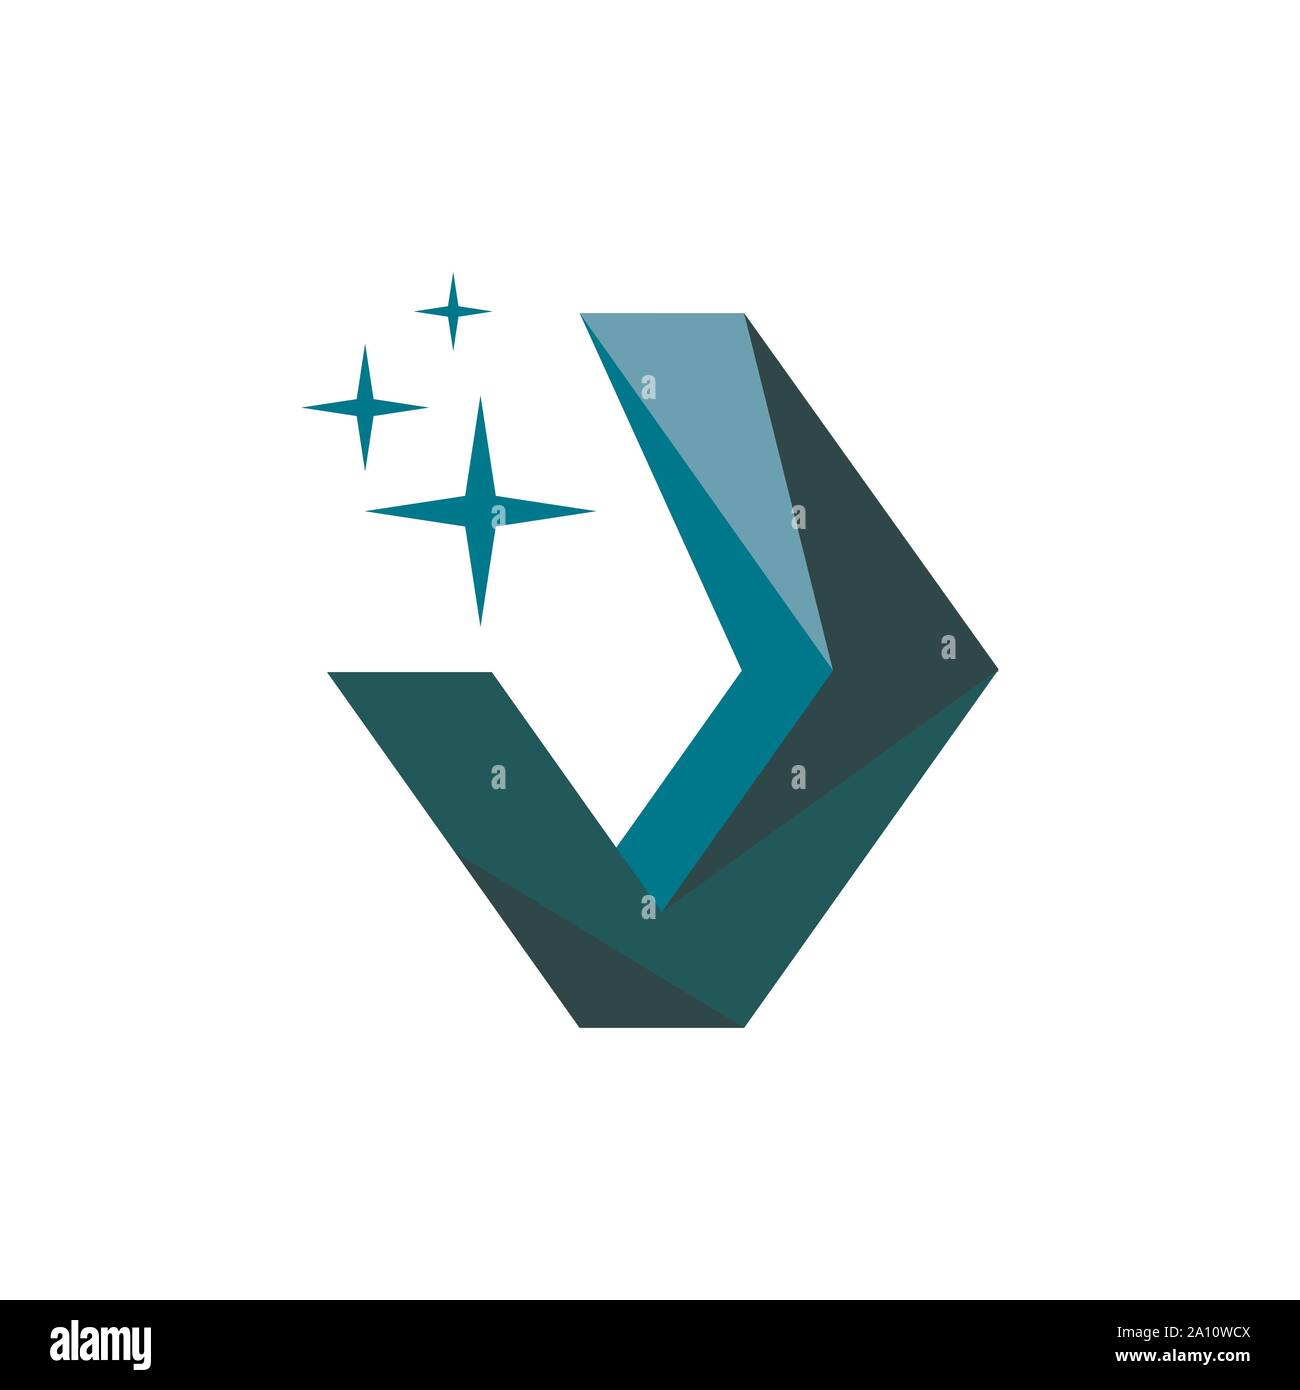 shinning jewelry diamond logo design vector illustrations Stock Vector